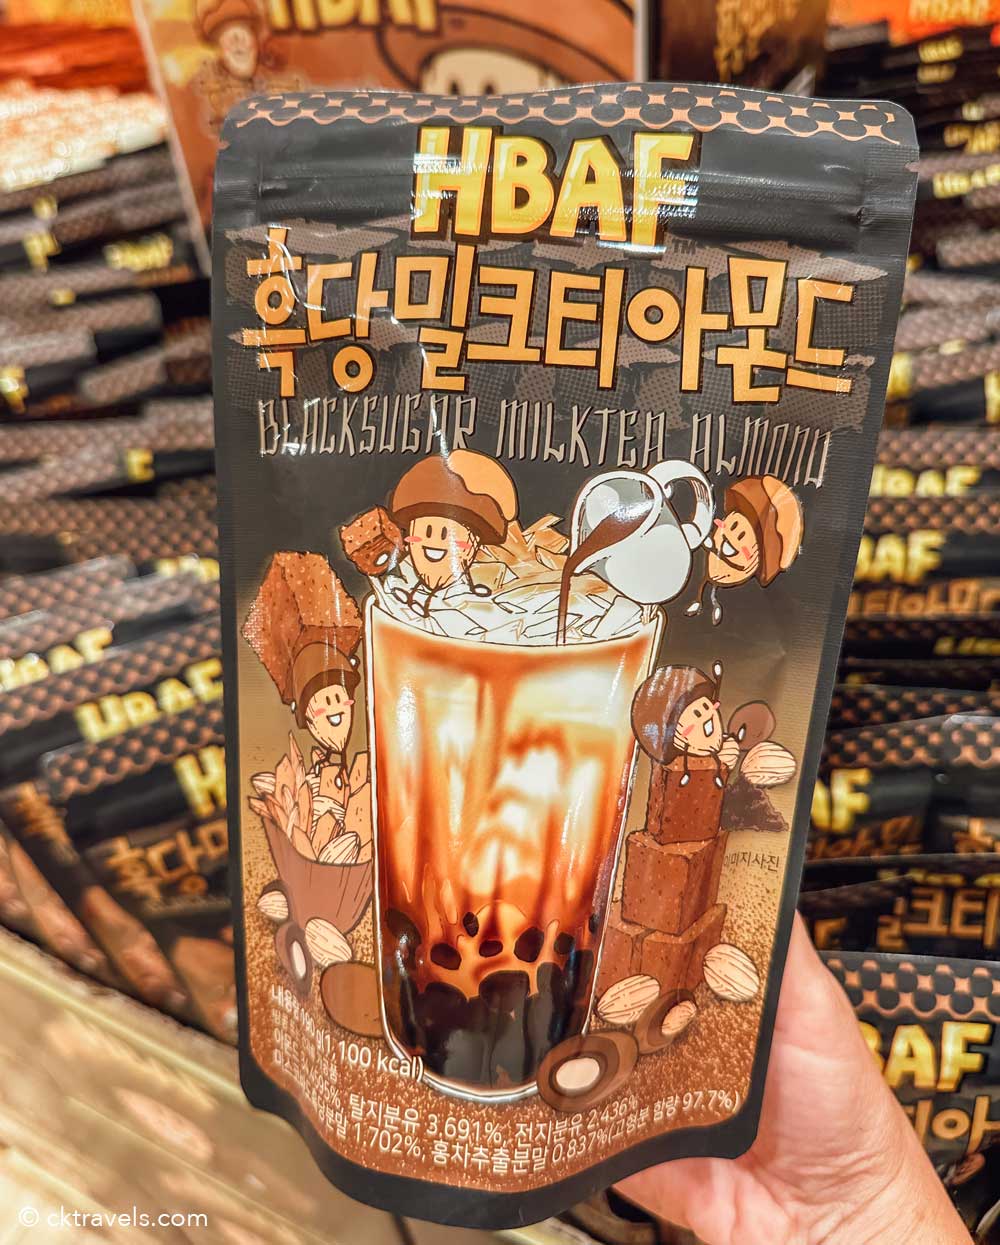 HBAF blacksugar milktea Almonds south korea